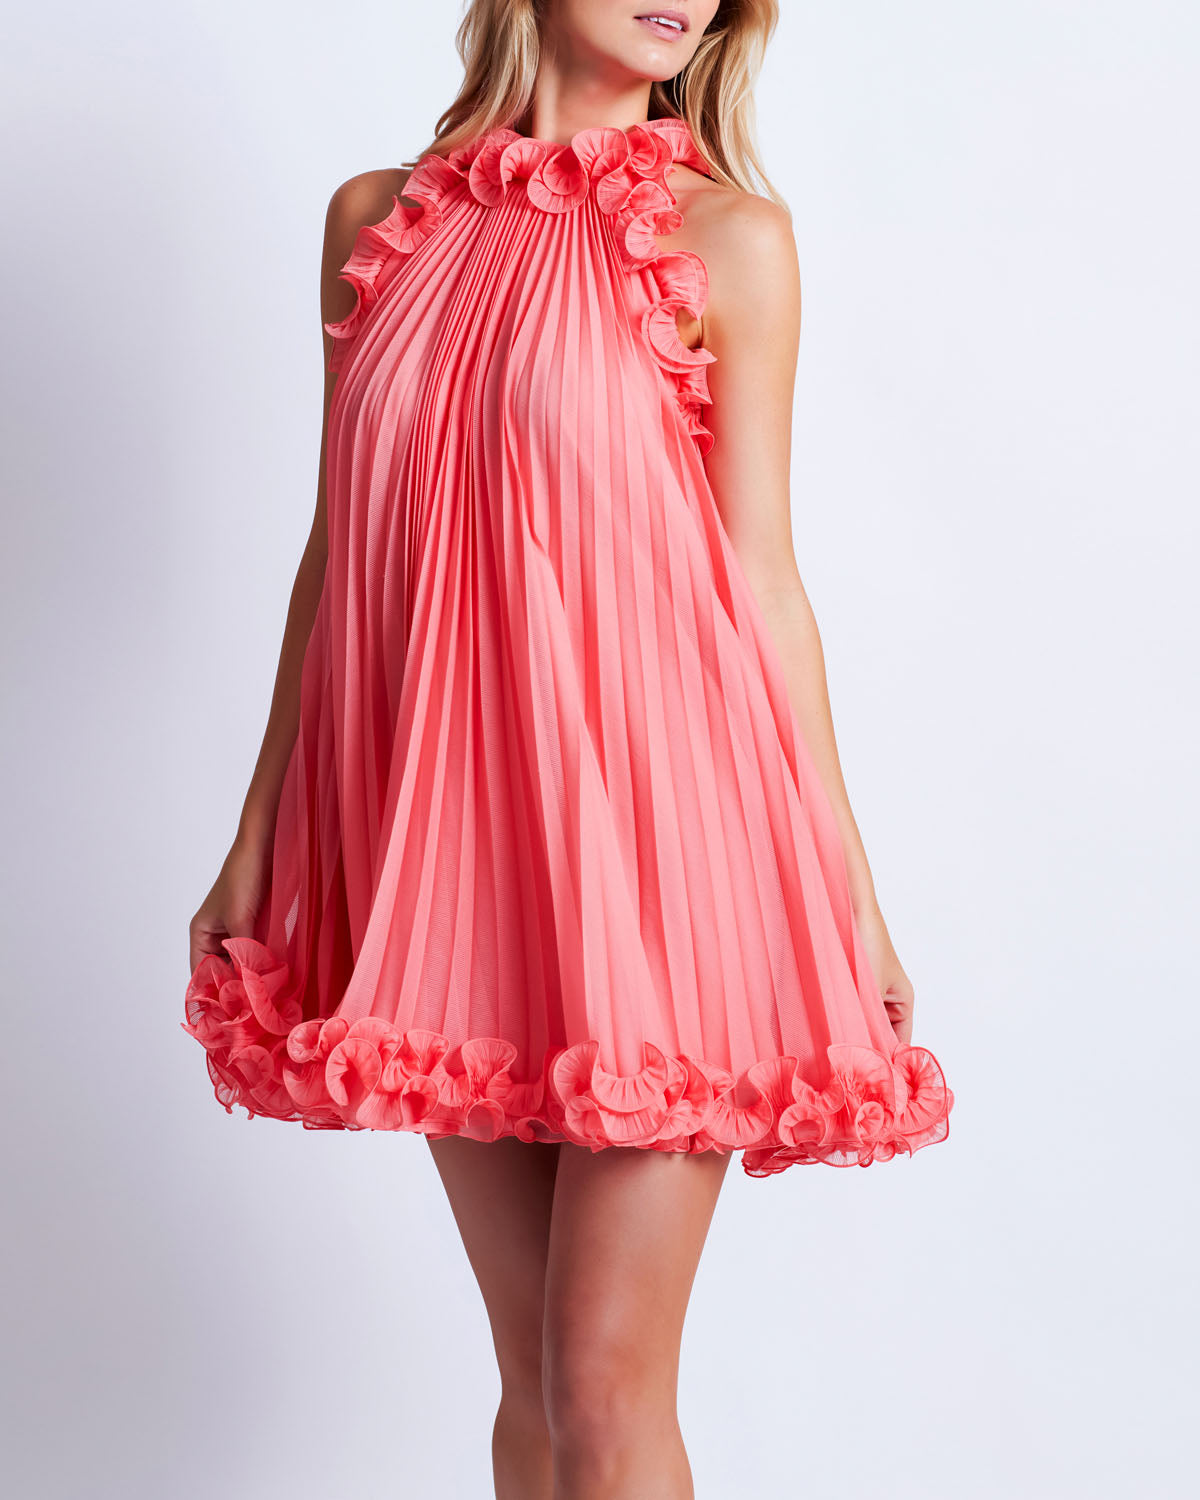 High Neck Mini Dress - Premium Short dress from Marina St Barth - Just $695! Shop now at Marina St Barth